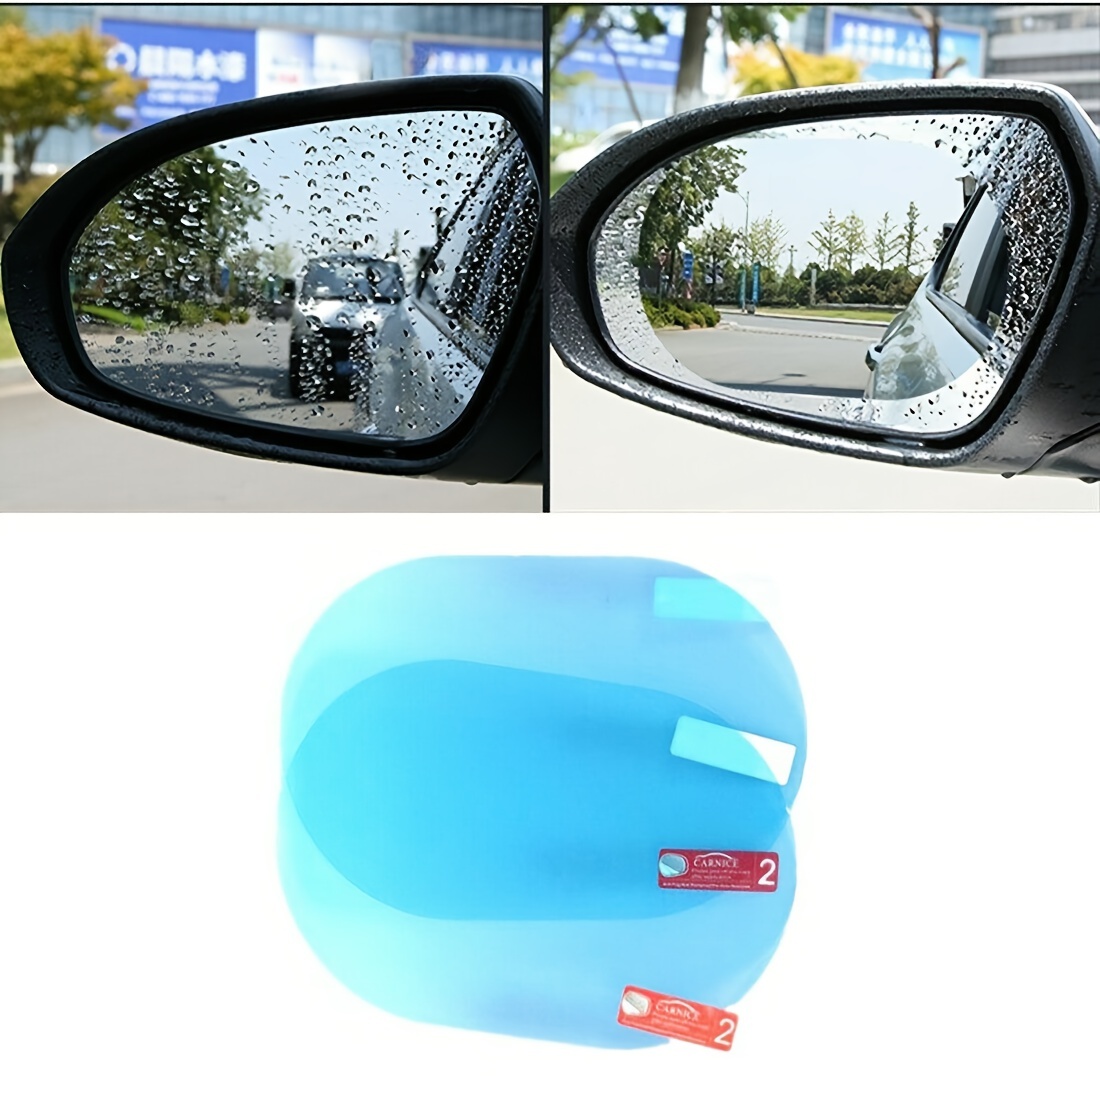 4 Stück Auto rückspiegel filme Anti regen nebel Wasserdichte